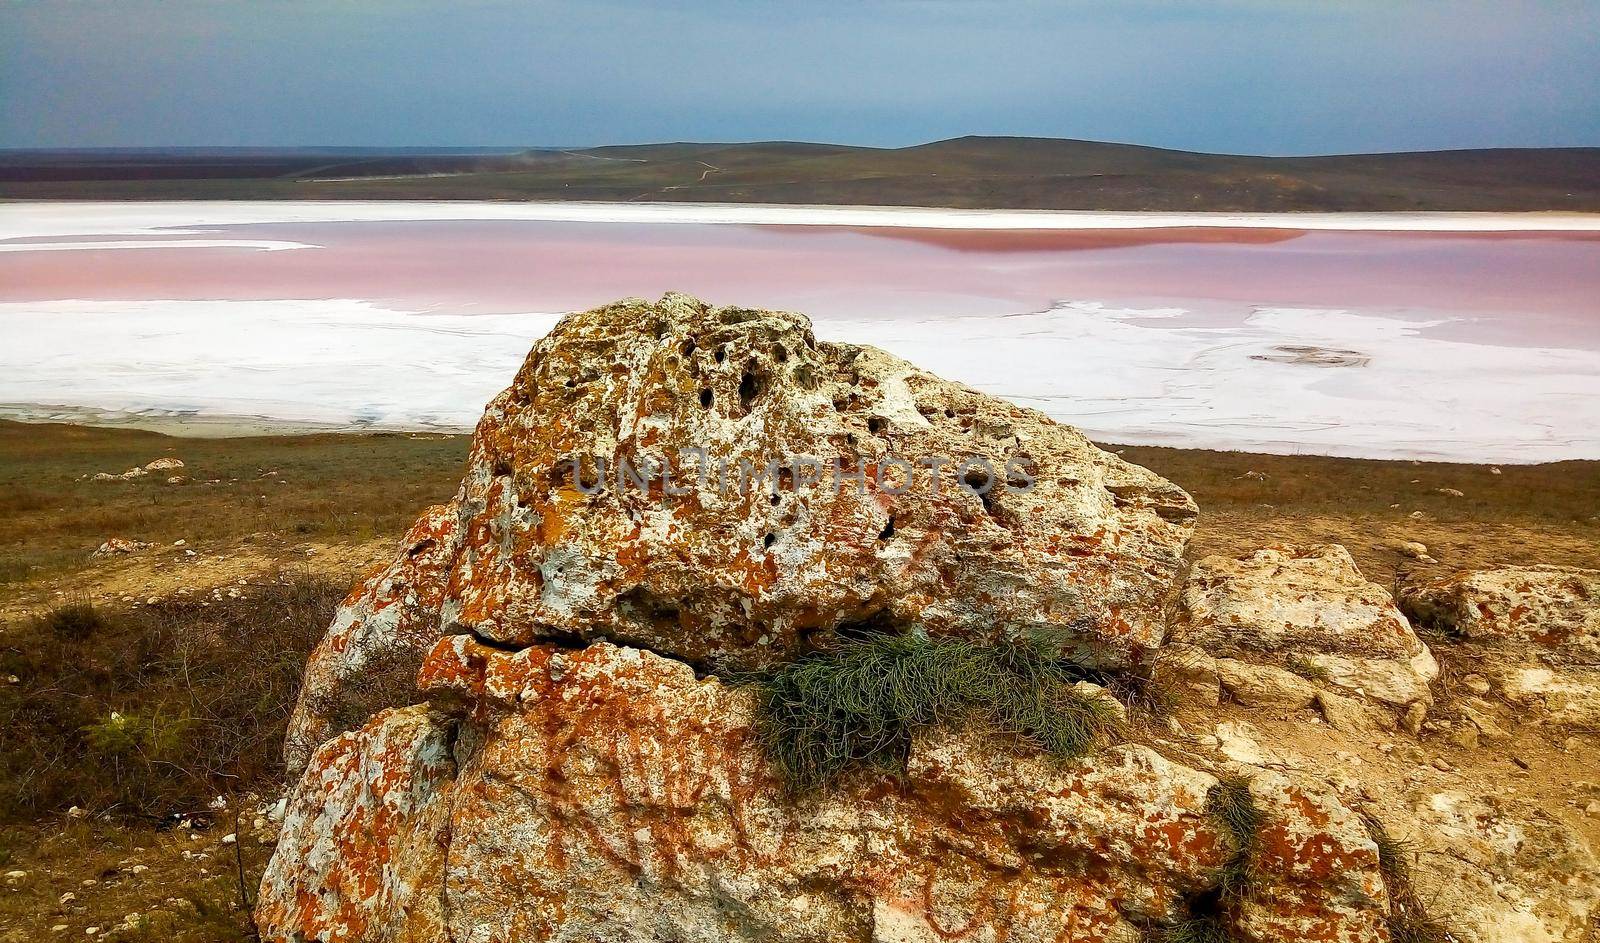 Pink salt lake. Salt industry - extraction of pink salt. Wonder of nature. The pink crust of salt on water by lapushka62